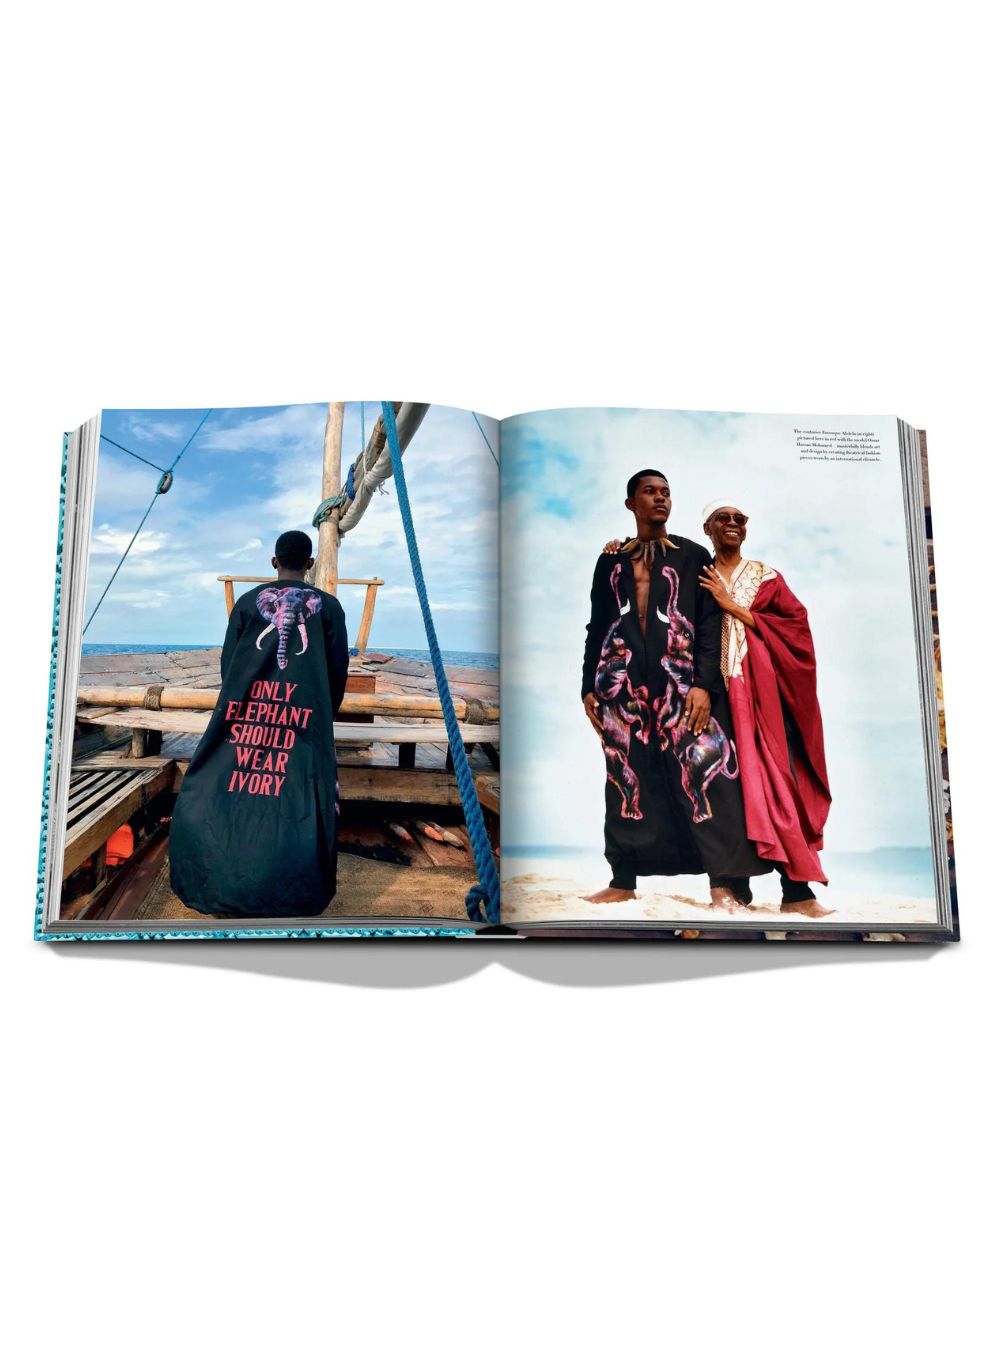 ASSOULINE | Zanzibar Book